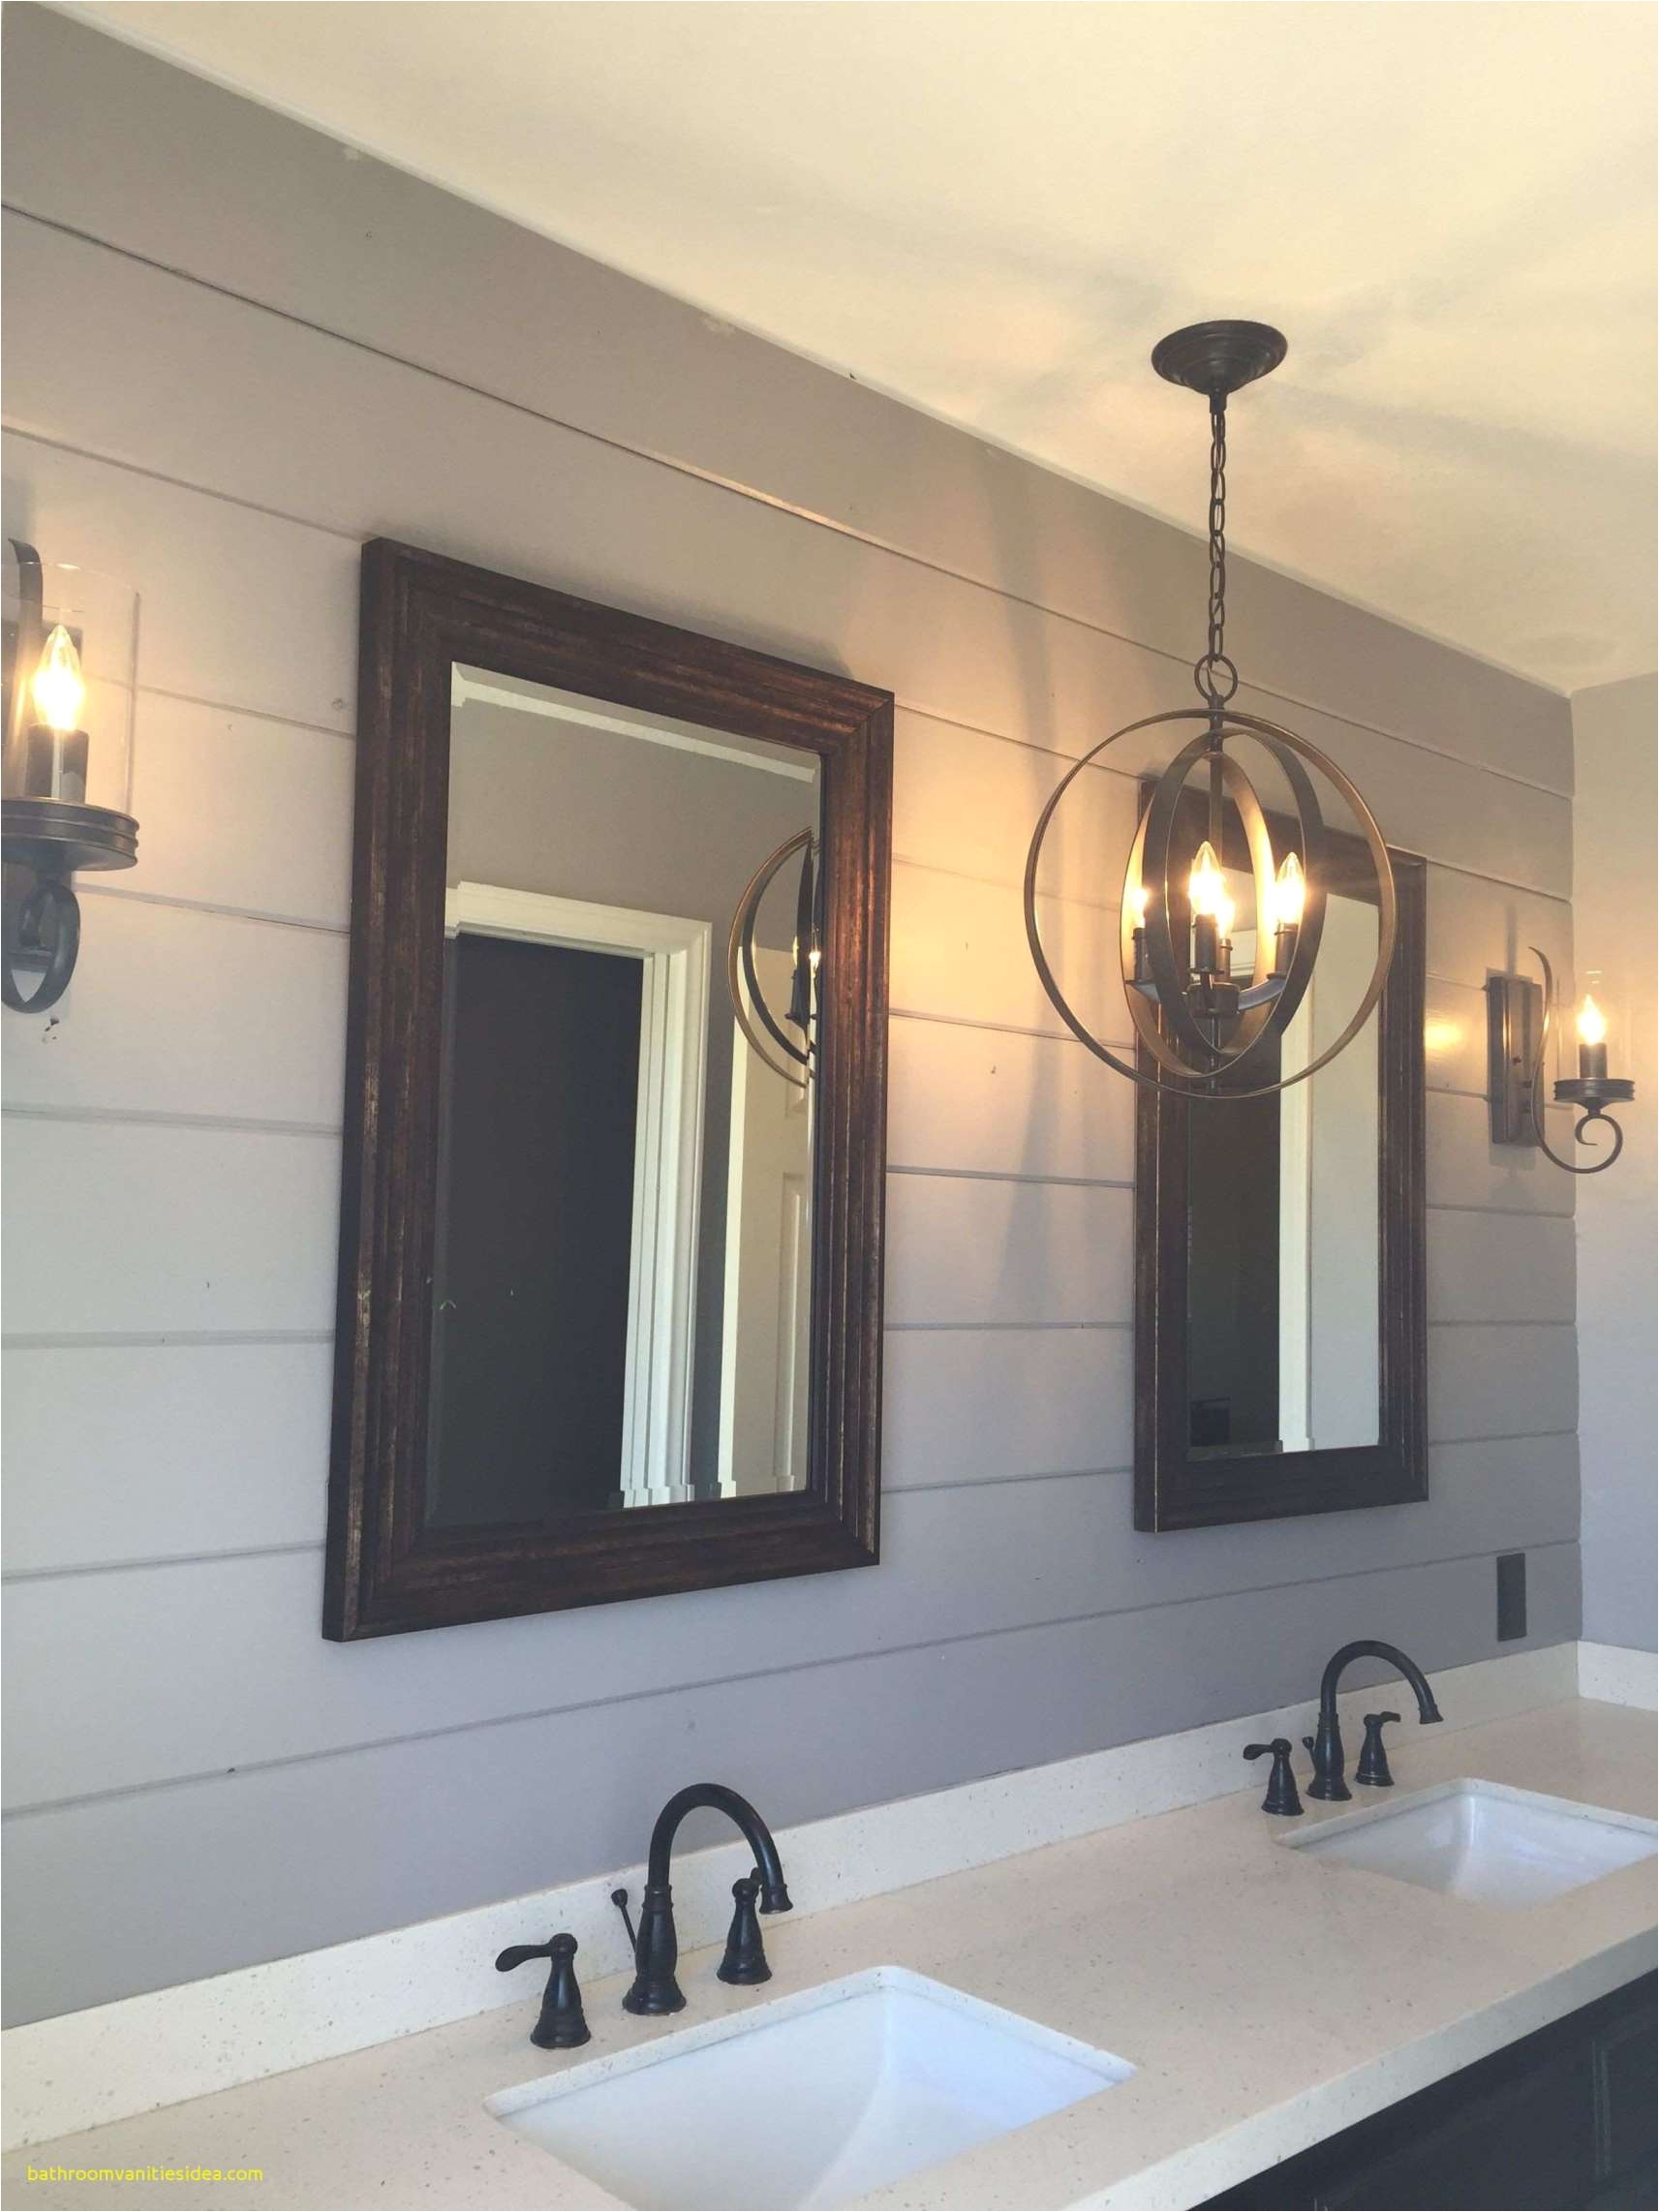 bathroom vanity mirror inspirational diy bathroom light luxury h sink install bathroom i 0d exciting